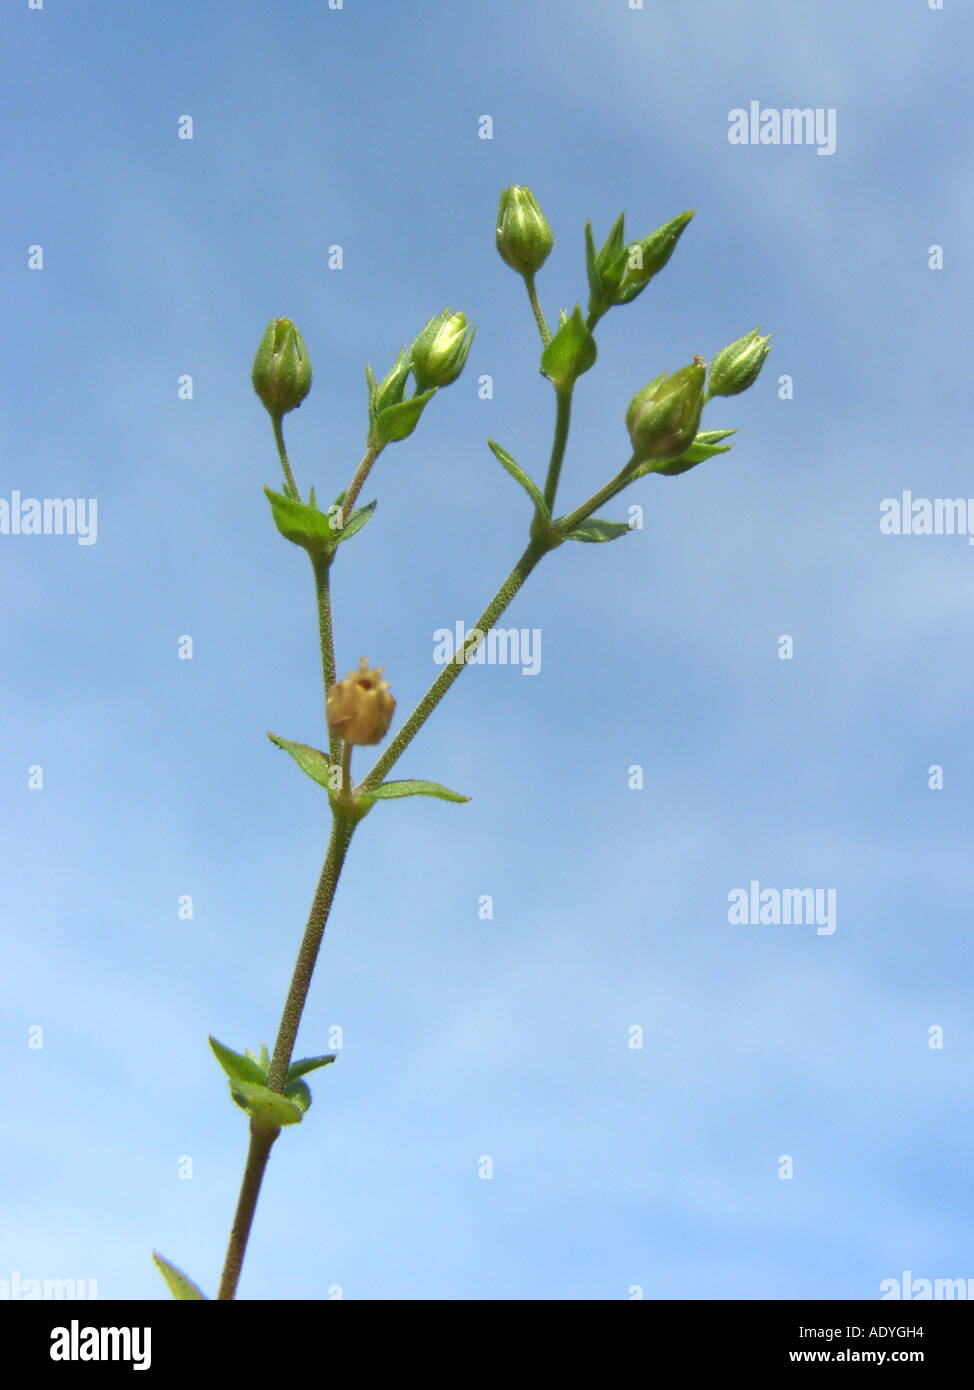 thyme-leaved sandwort, thyme-leaf sandwort (Arenaria serpyllifolia), inflorescence against blue sky Stock Photo